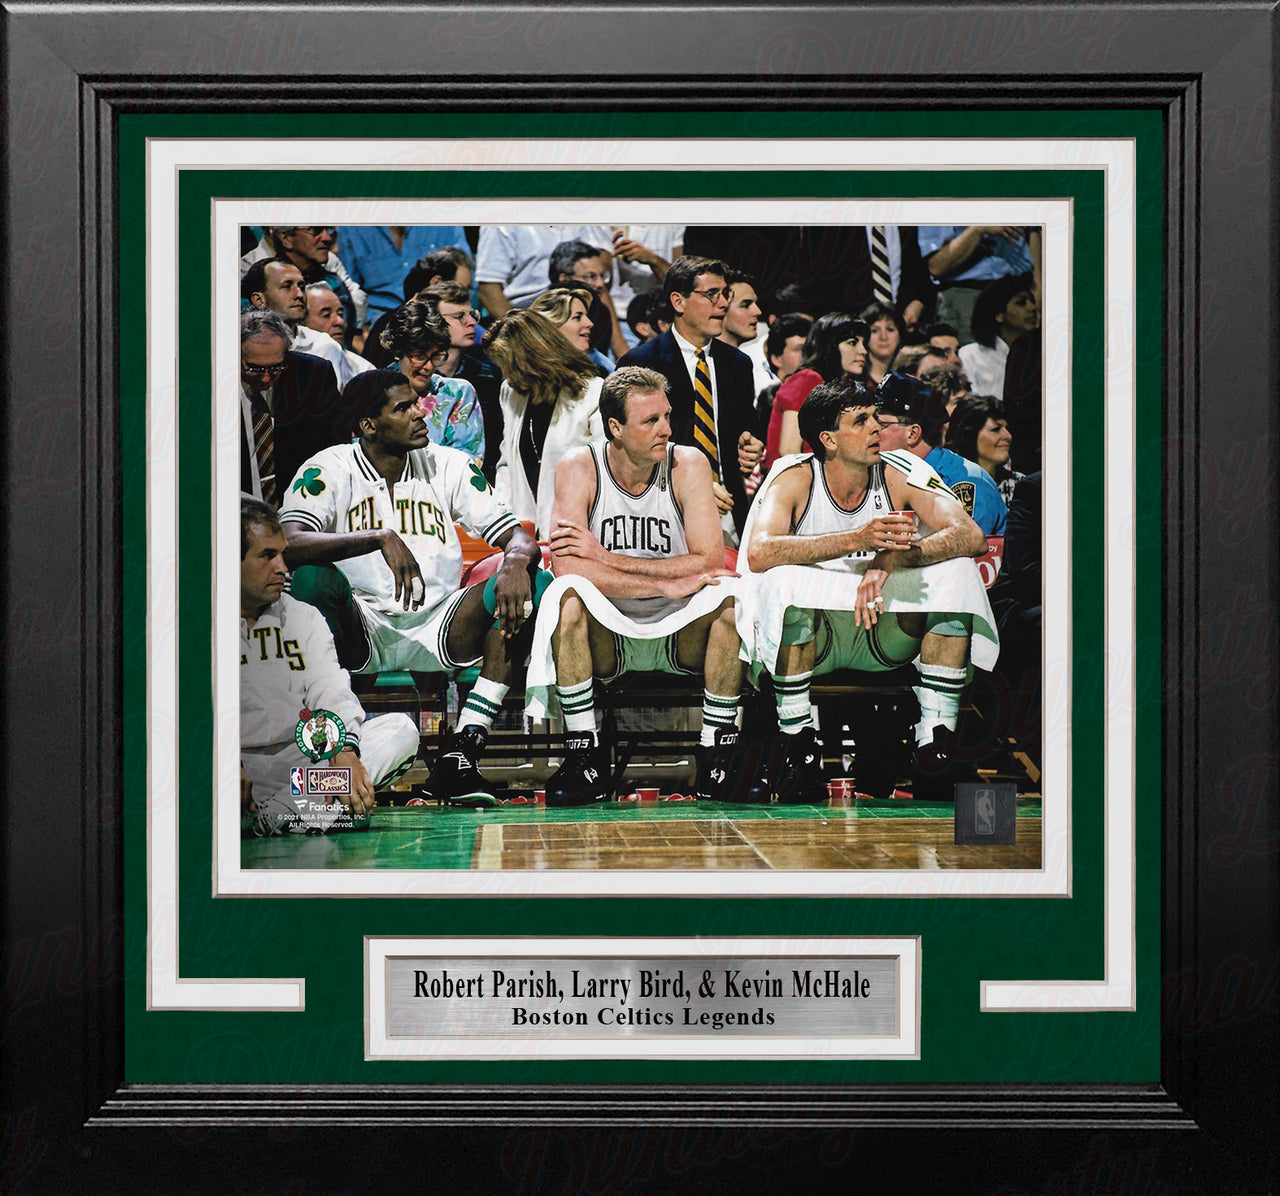 Robert Parish, Larry Bird, & Kevin McHale Boston Celtics 8" x 10" Framed Basketball Photo